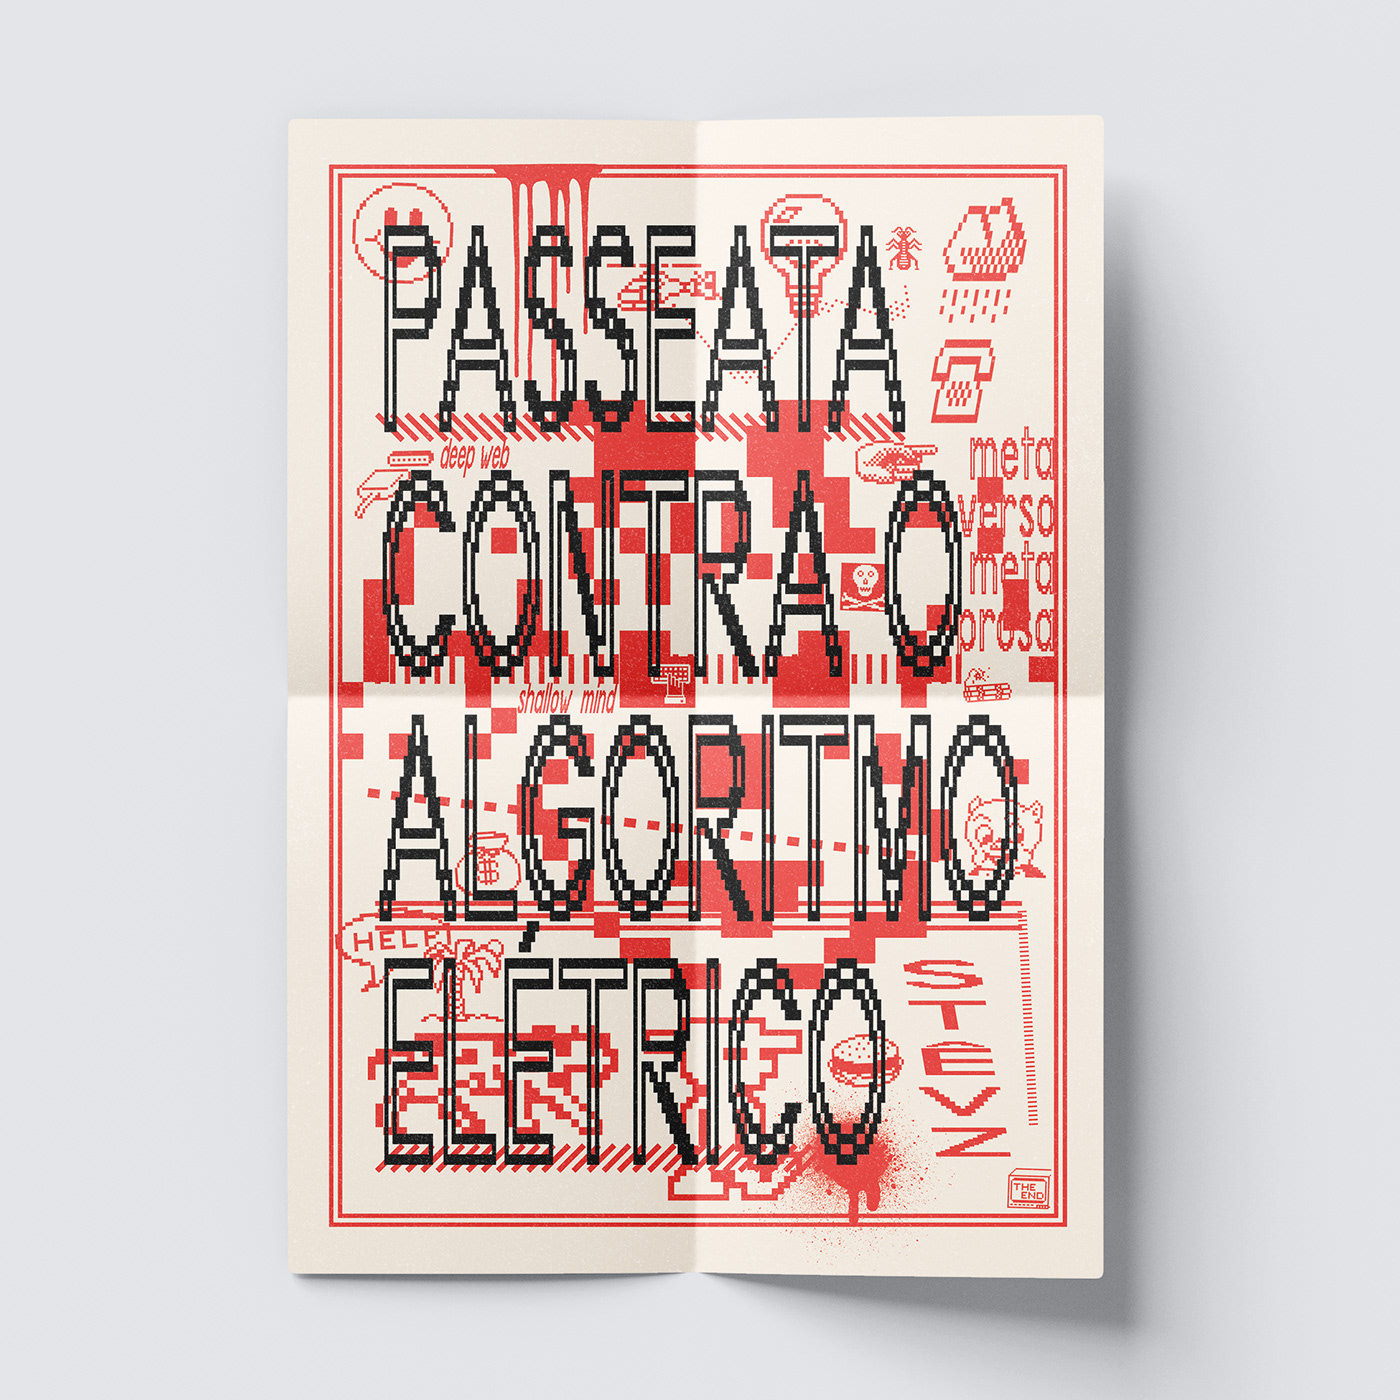 book editorial graphic design  Livro poesia Poetry  algorithm algoritmo poema